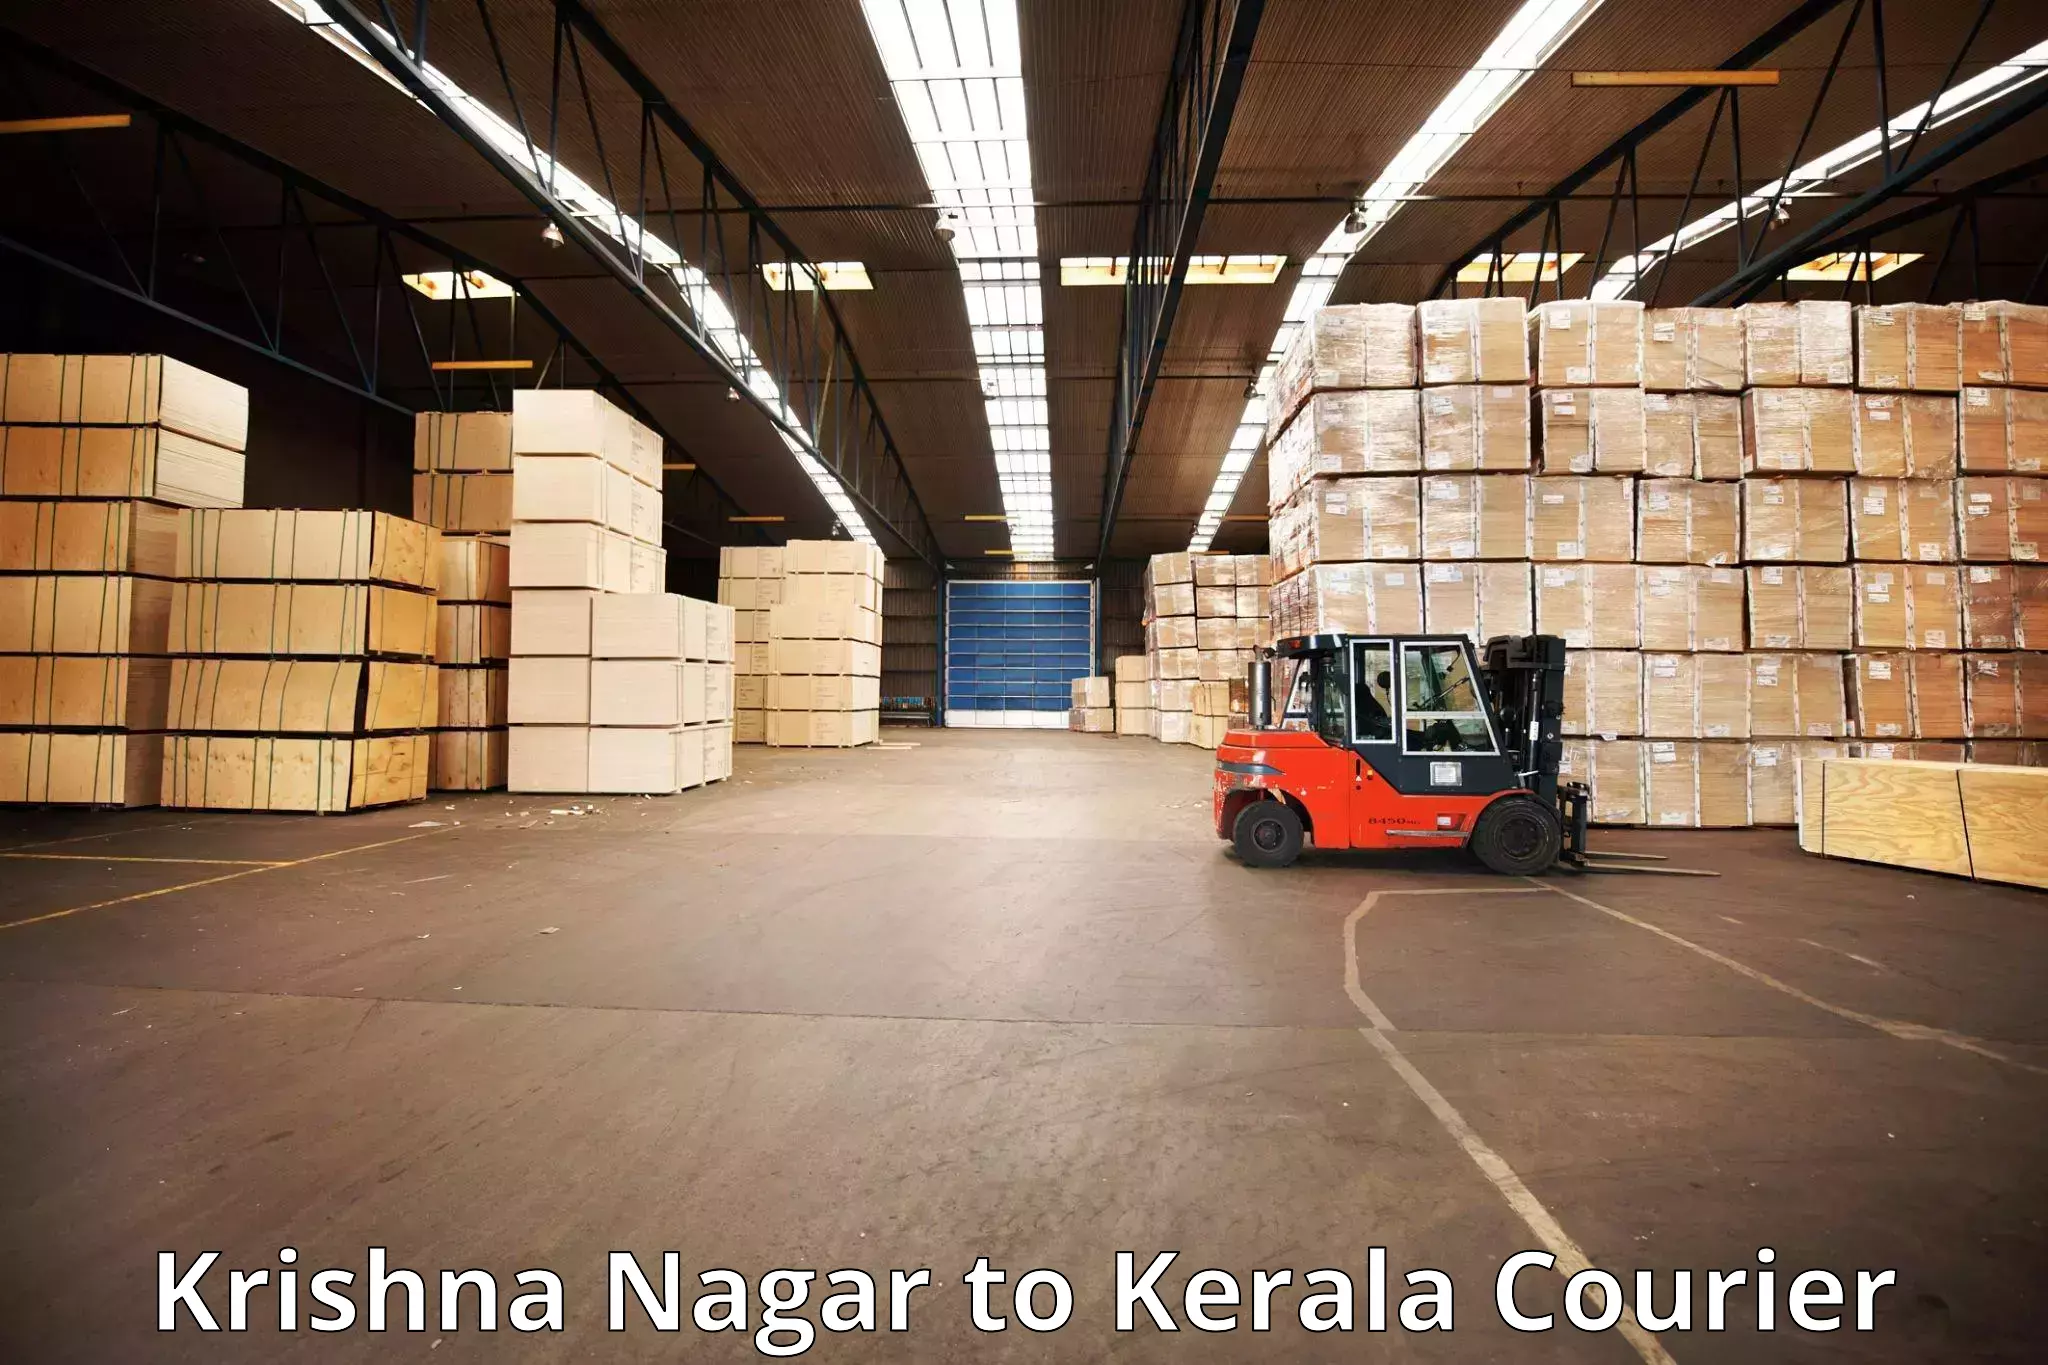 Luggage shipment specialists Krishna Nagar to Kerala